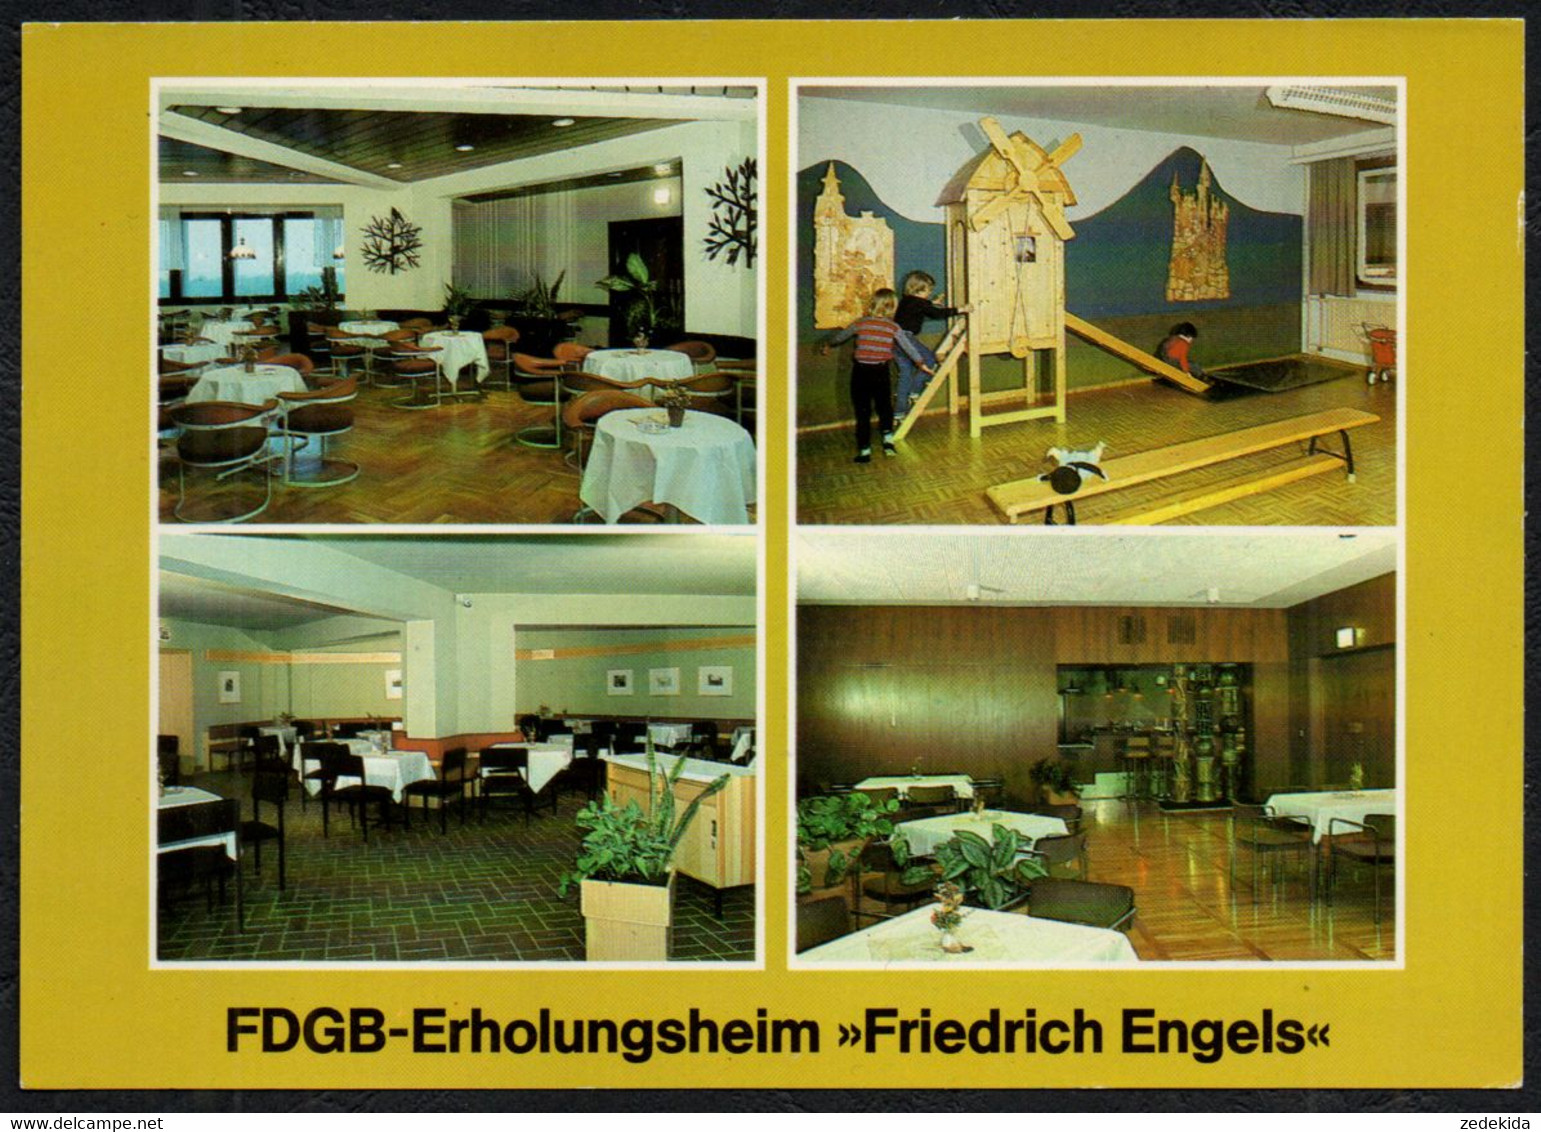 E1288 - TOP Templin FDGB Heim Friedrich Engels Innenansicht - Verlag Bild Und Heimat Reichenbach - Templin